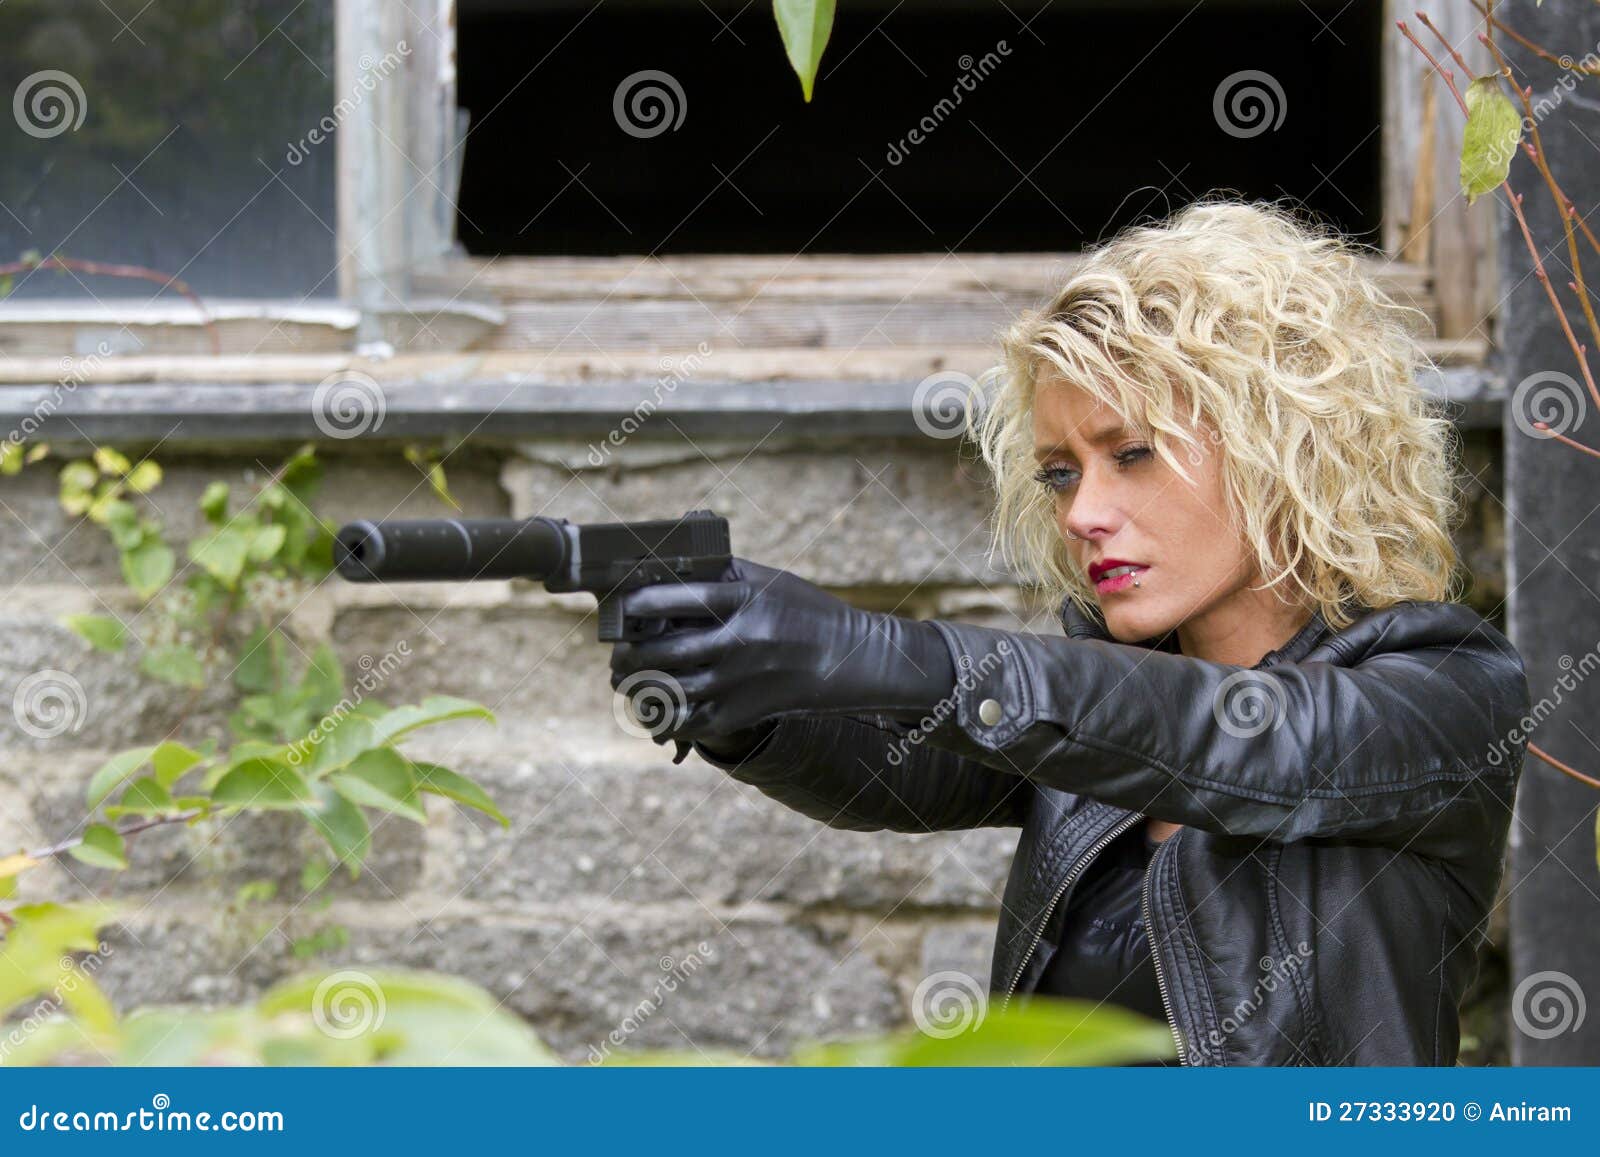 female spy with silencer handgun